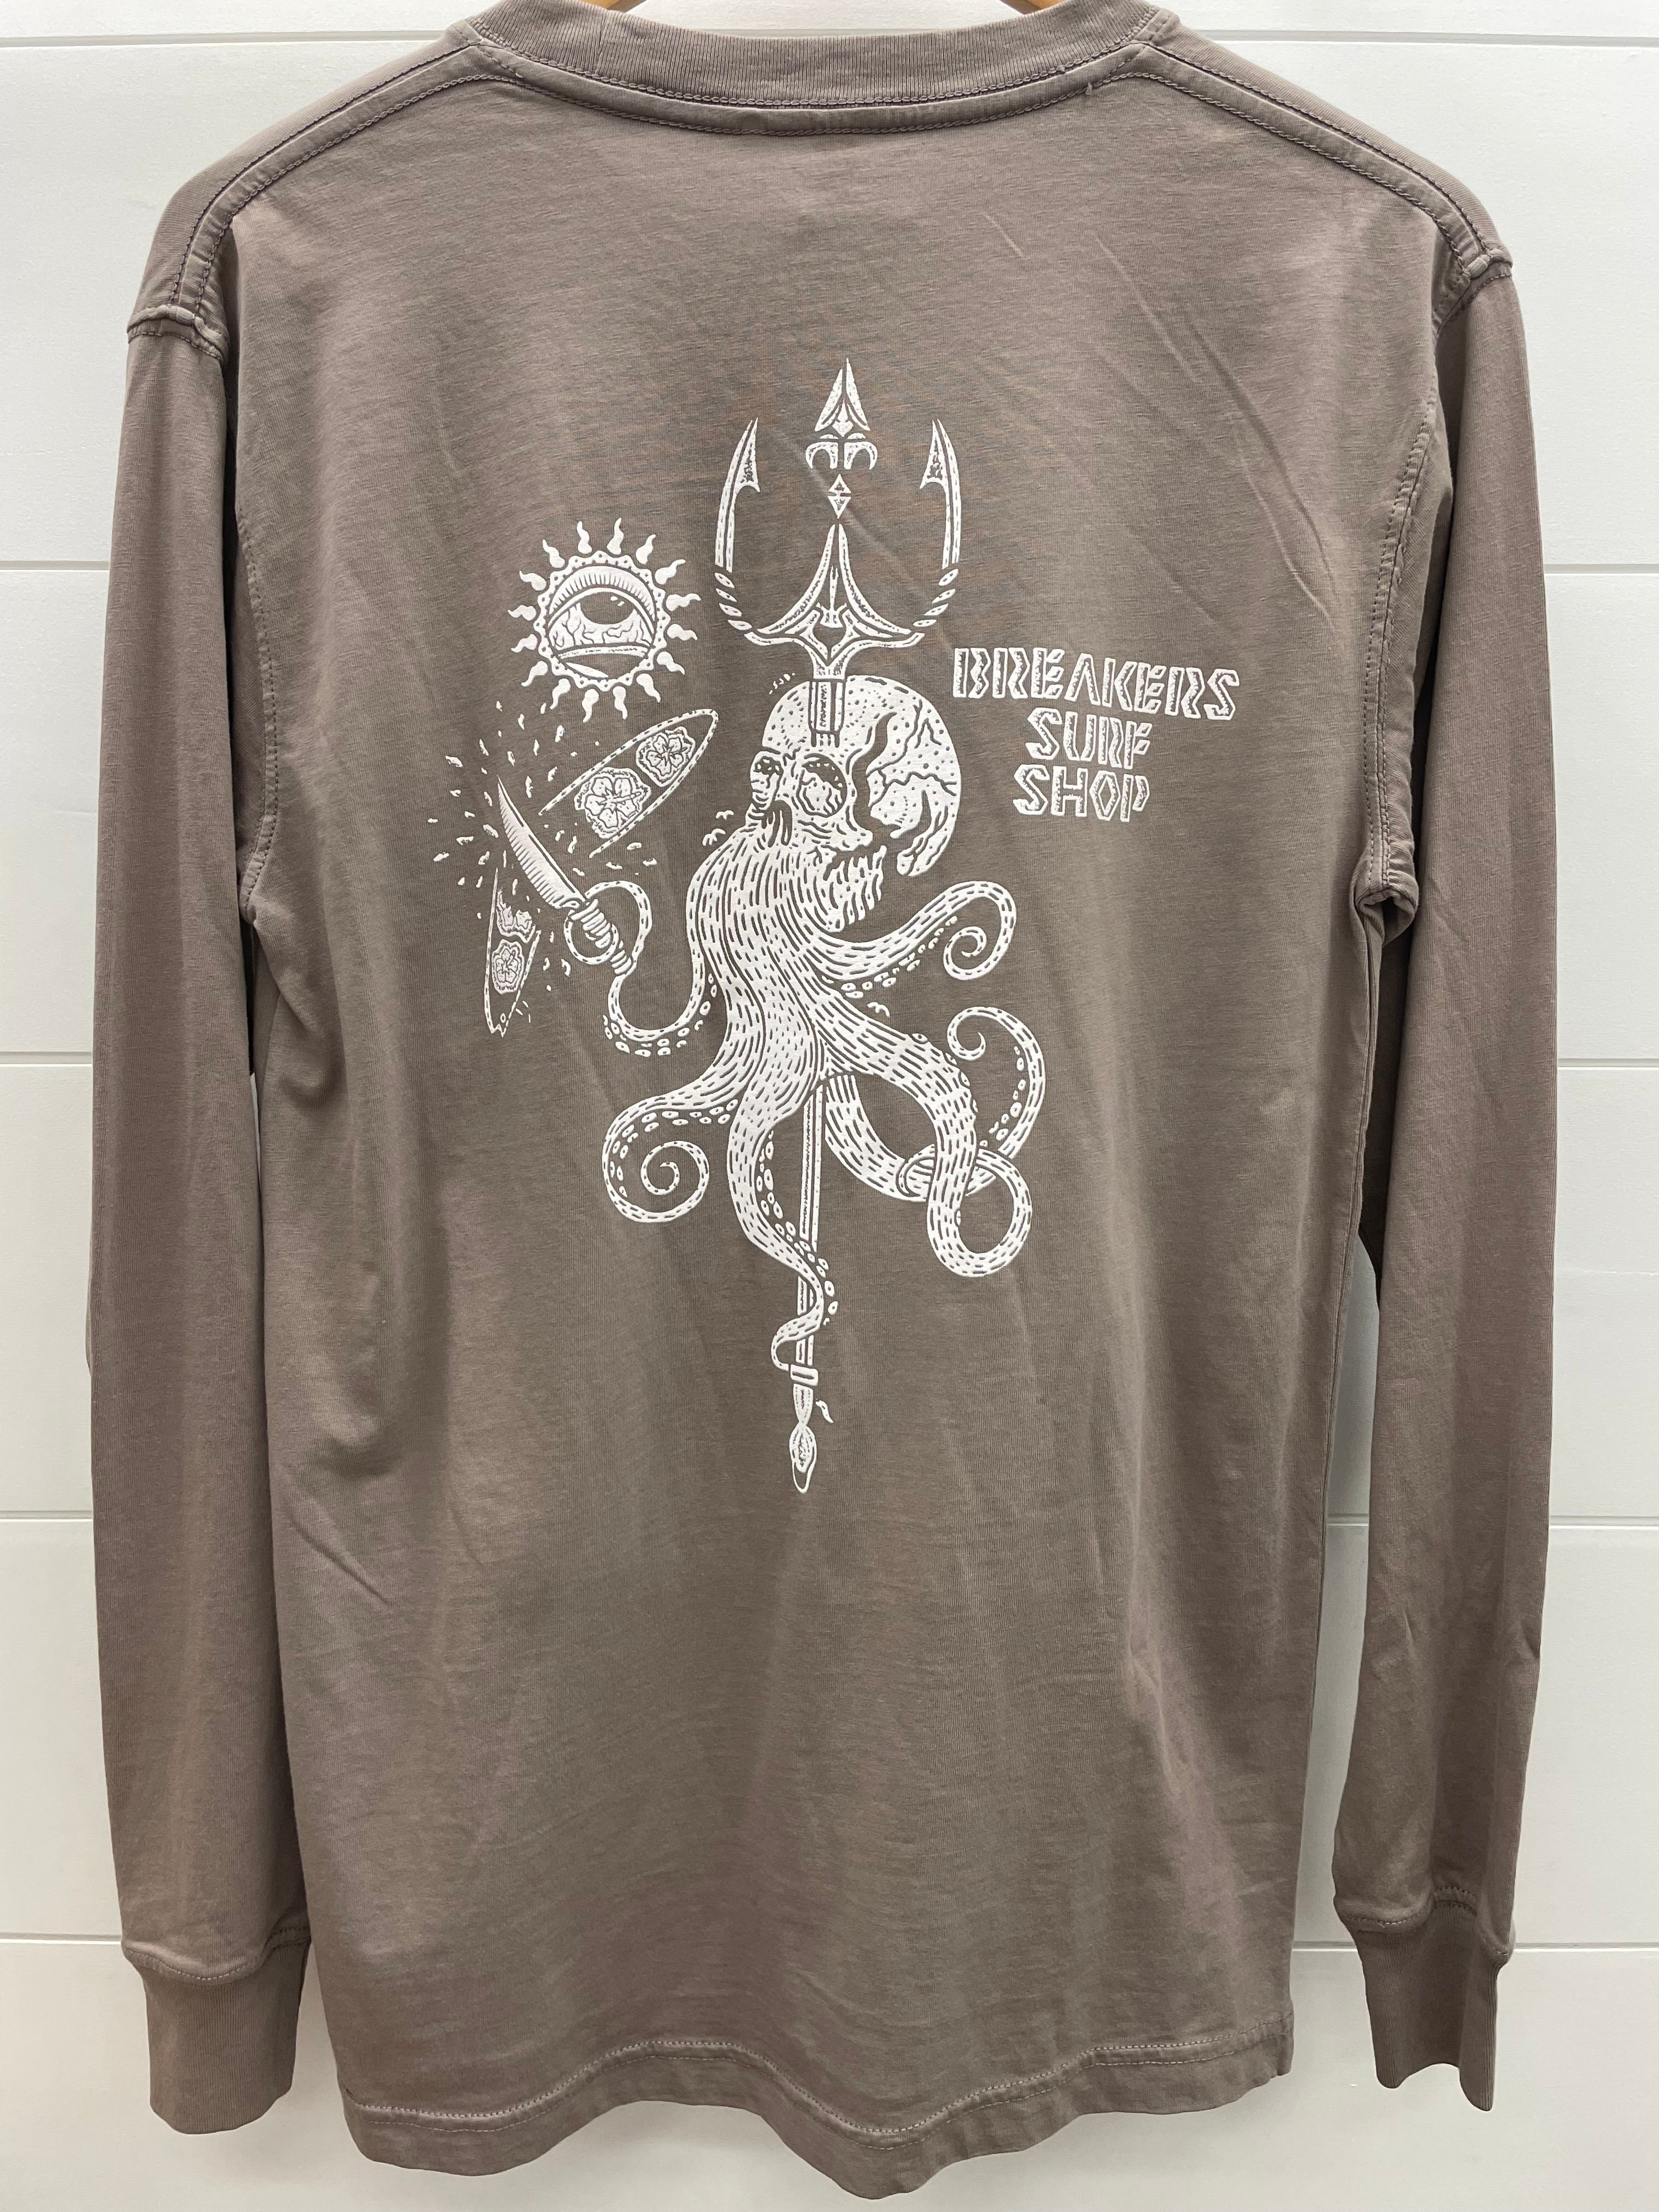 Octobreaker Long Sleeve T-Shirt